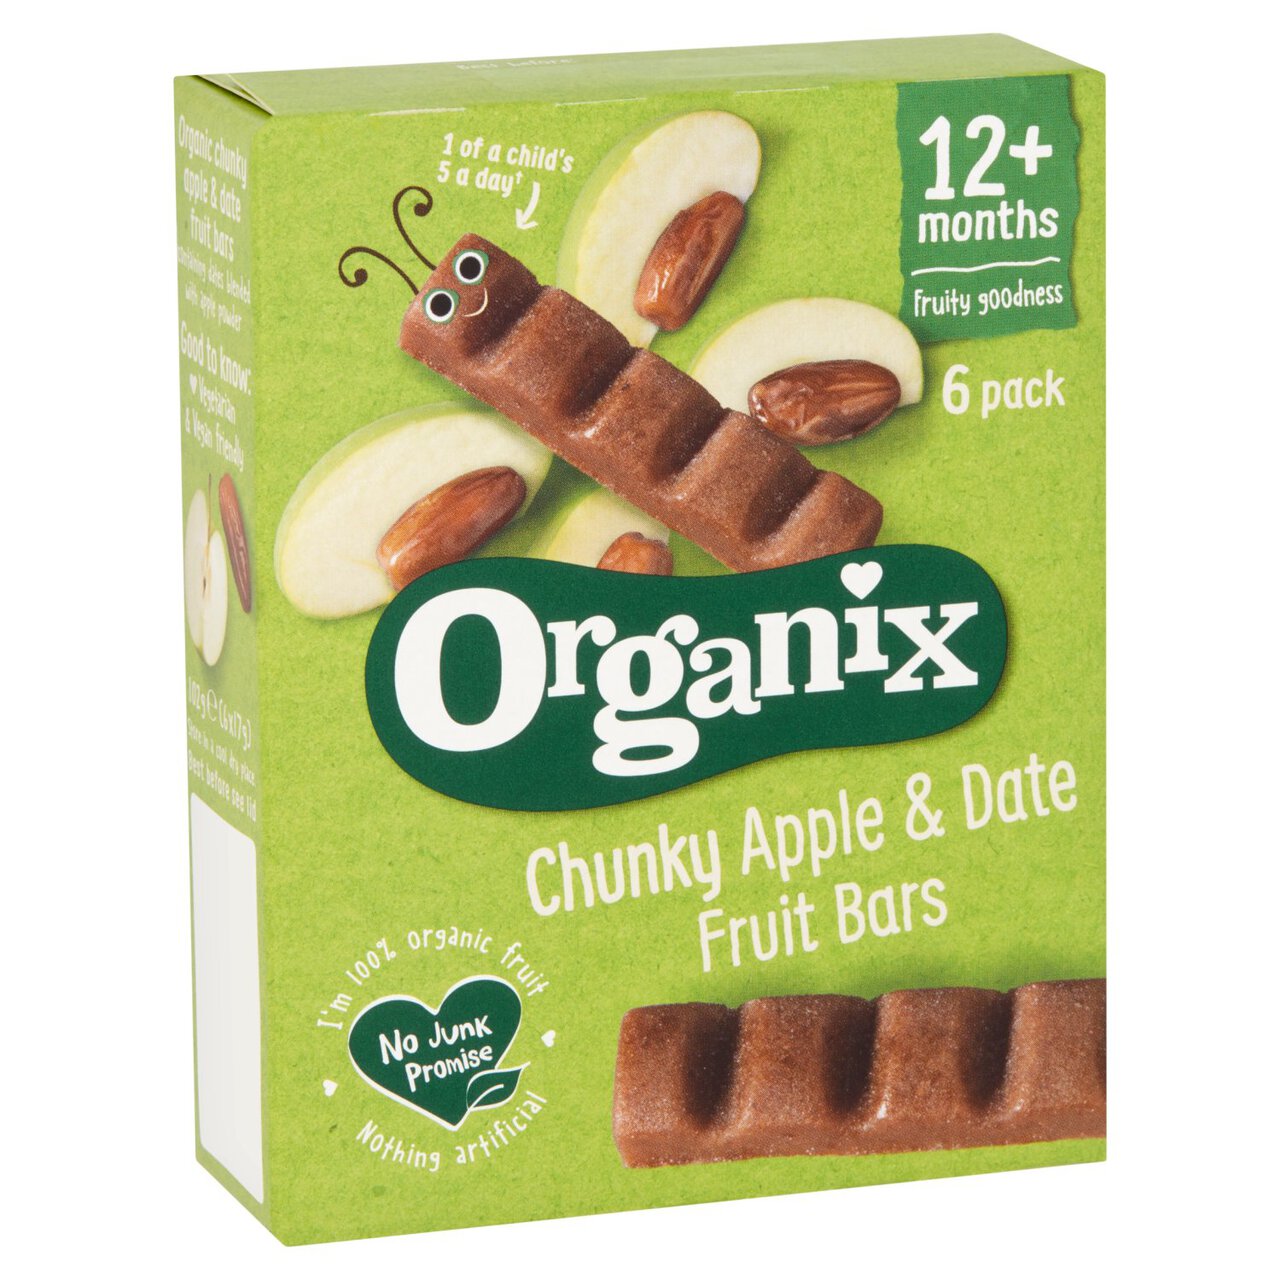 Organix Chunky Apple & Date Organic Fruit Bars Toddler Snack Multipack 6 x 17g